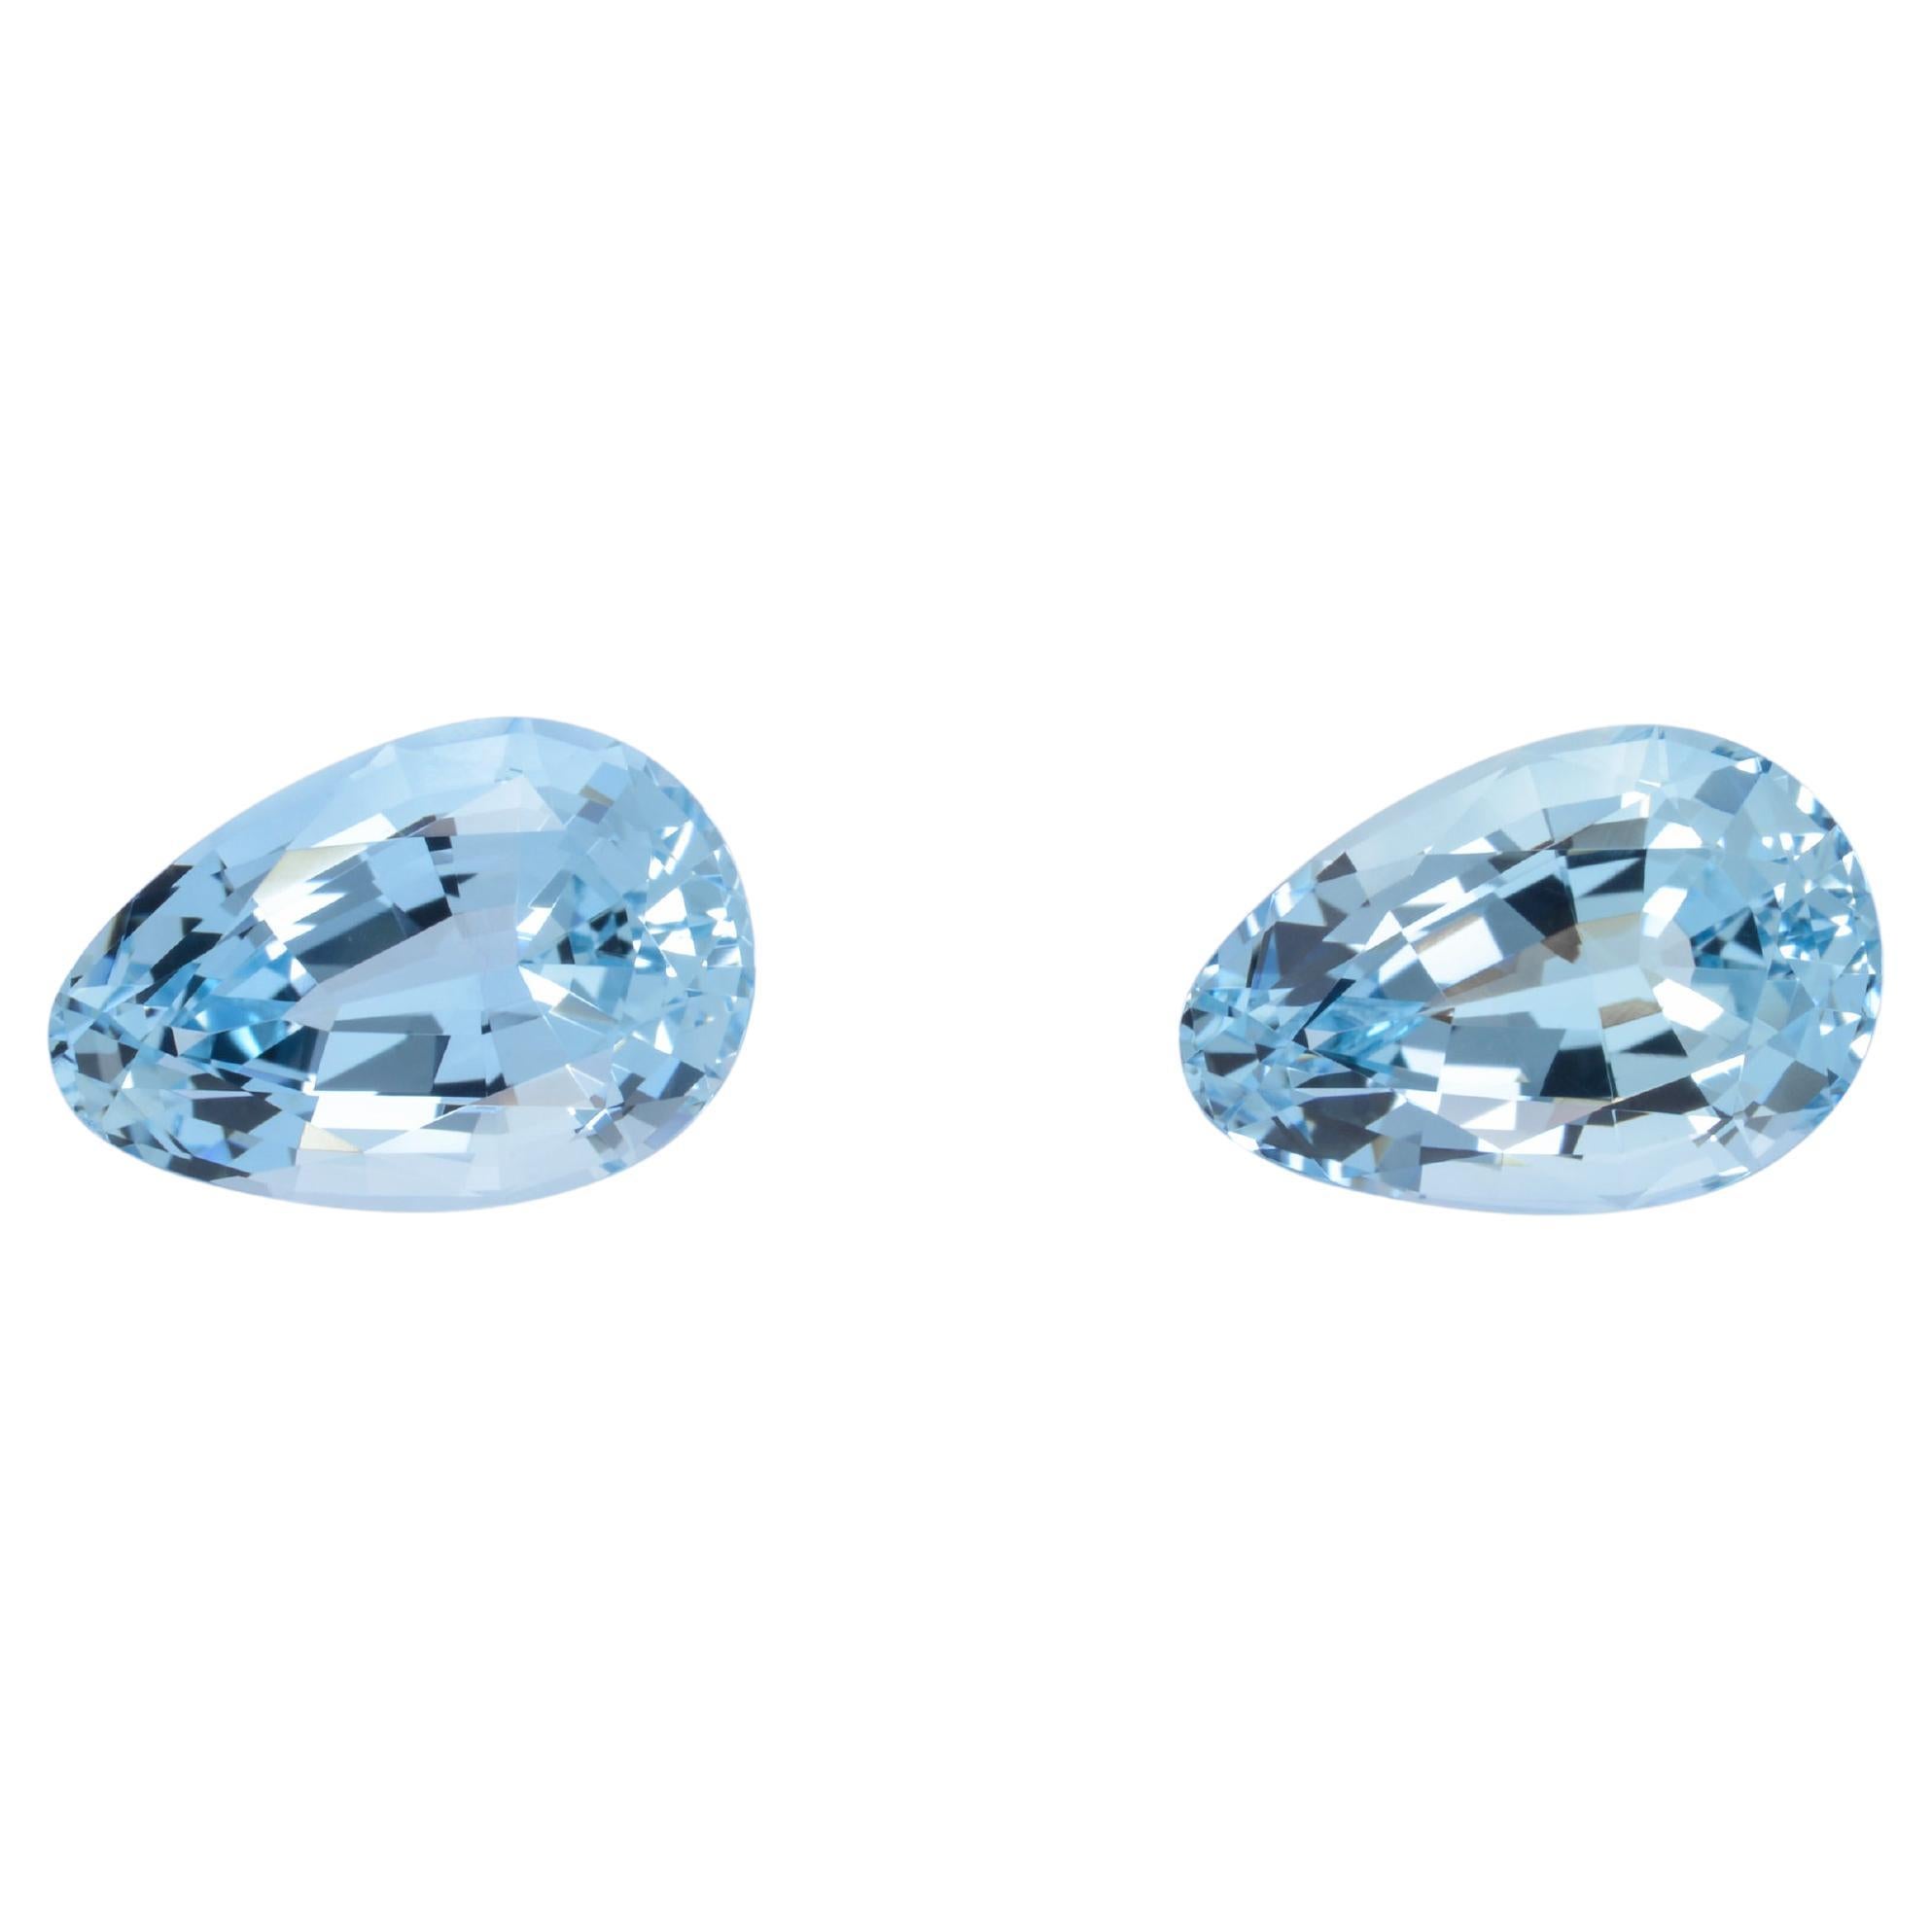 Contemporary Aquamarine Earrings Loose Gemstones 10.87 Carat Pear Shapes Loupe Clean